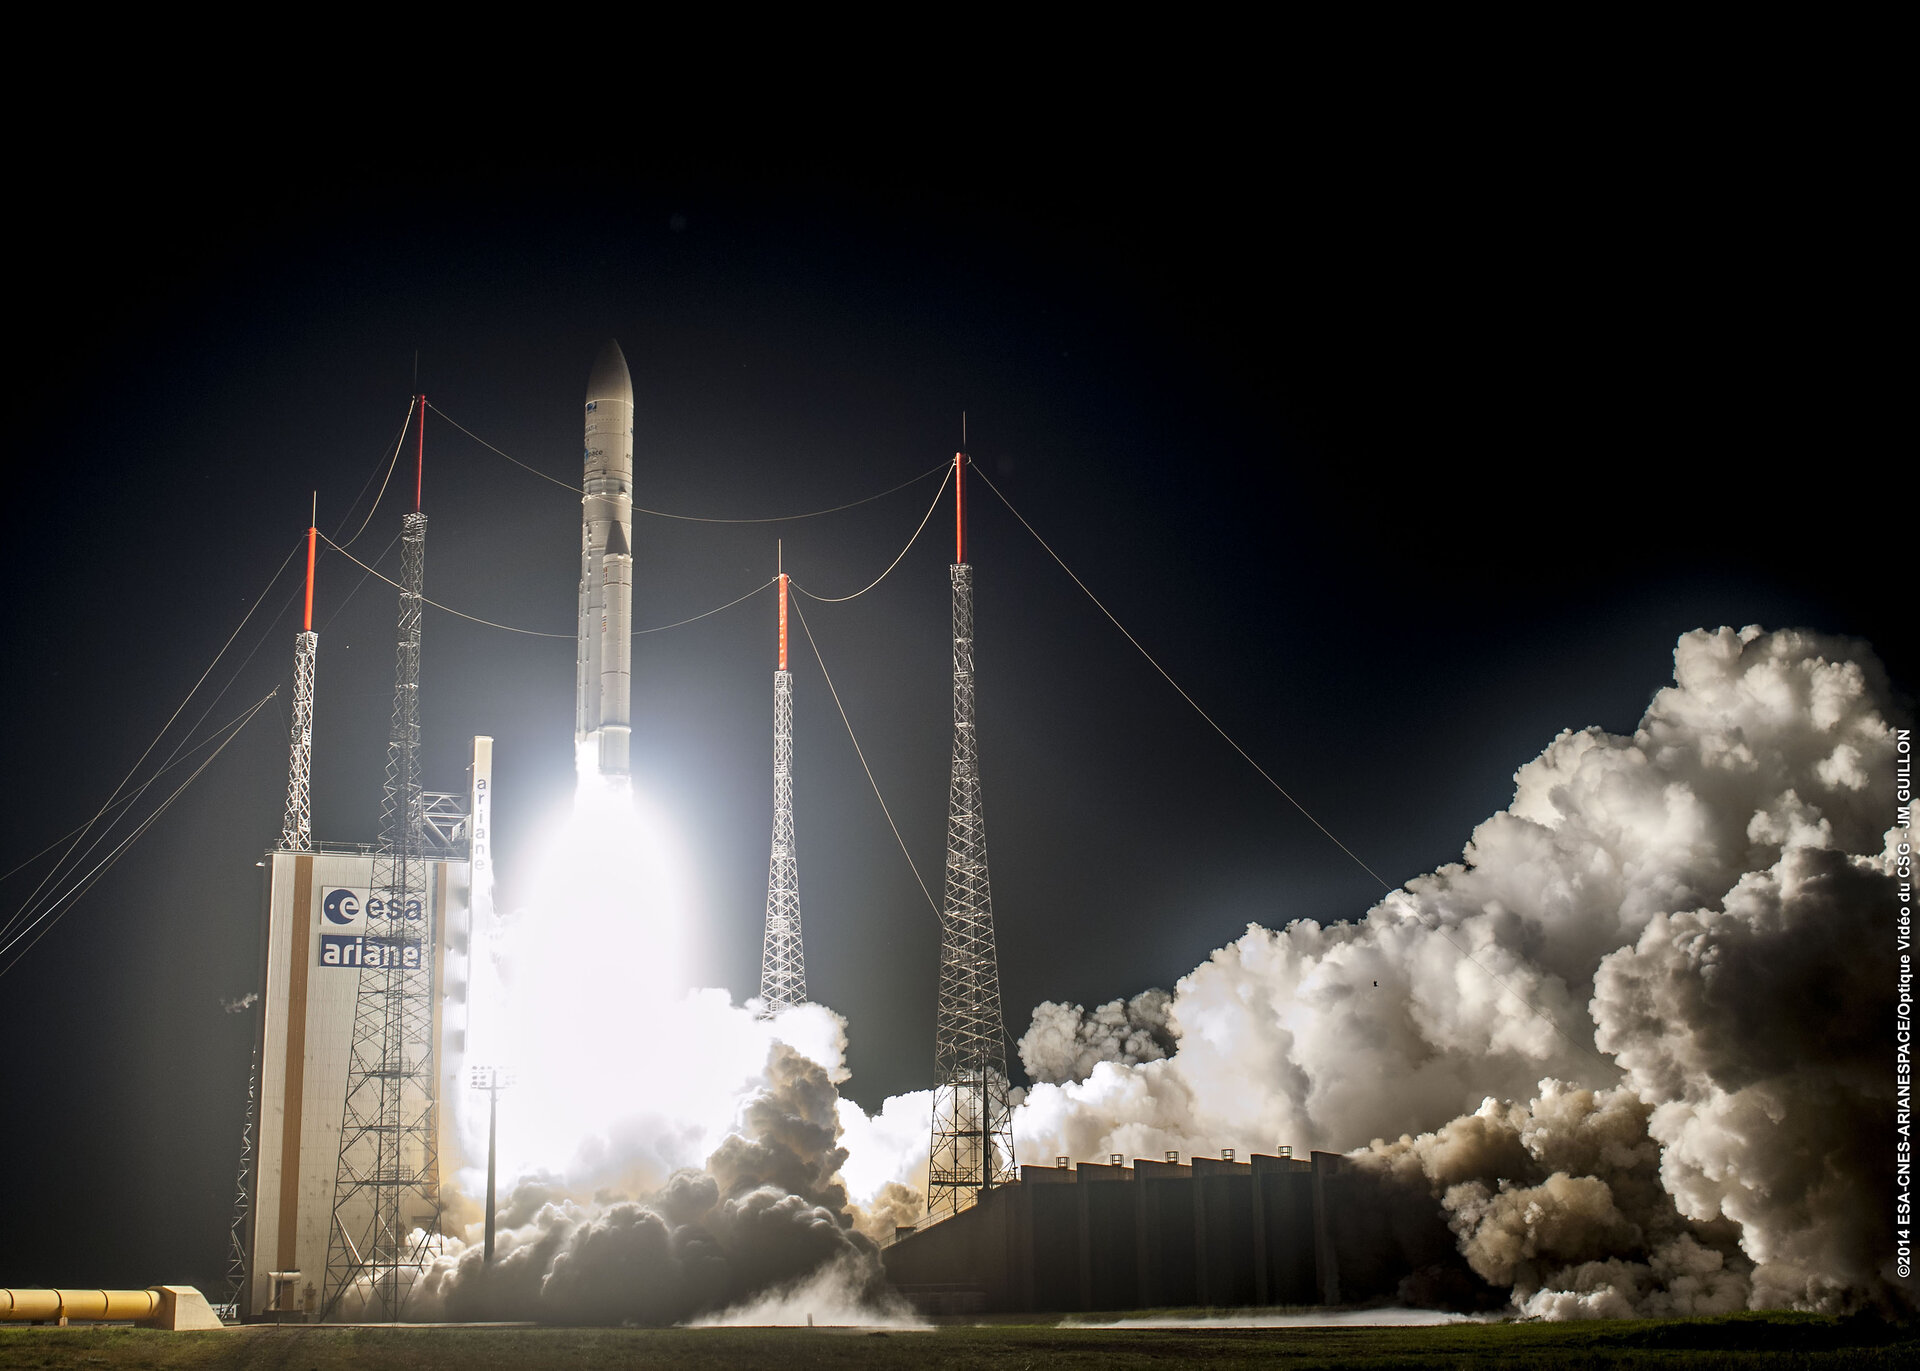 Ariane 5 liftoff on flight VA220